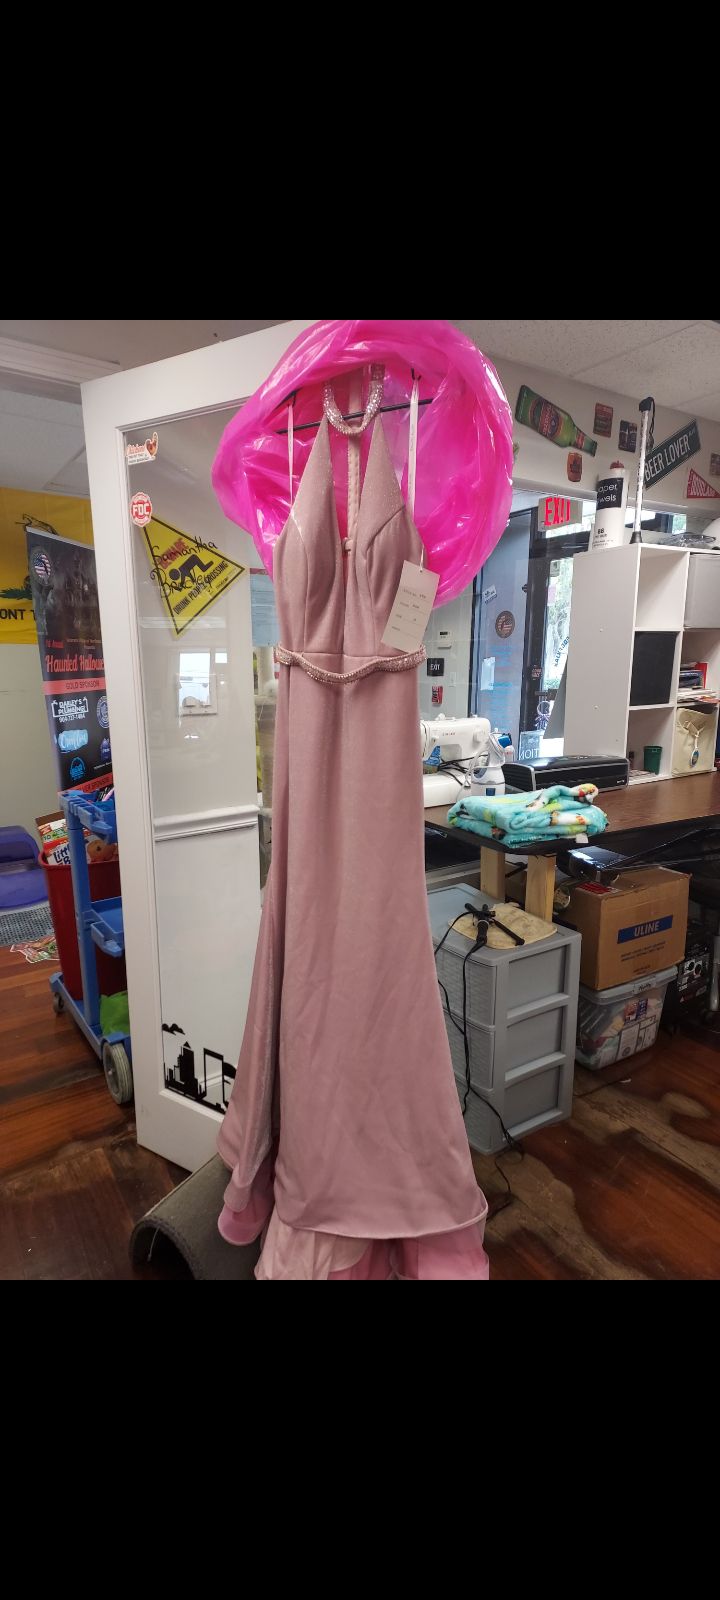 Style 6436 Rachel Allan Size 14 Pink Mermaid Dress on Queenly